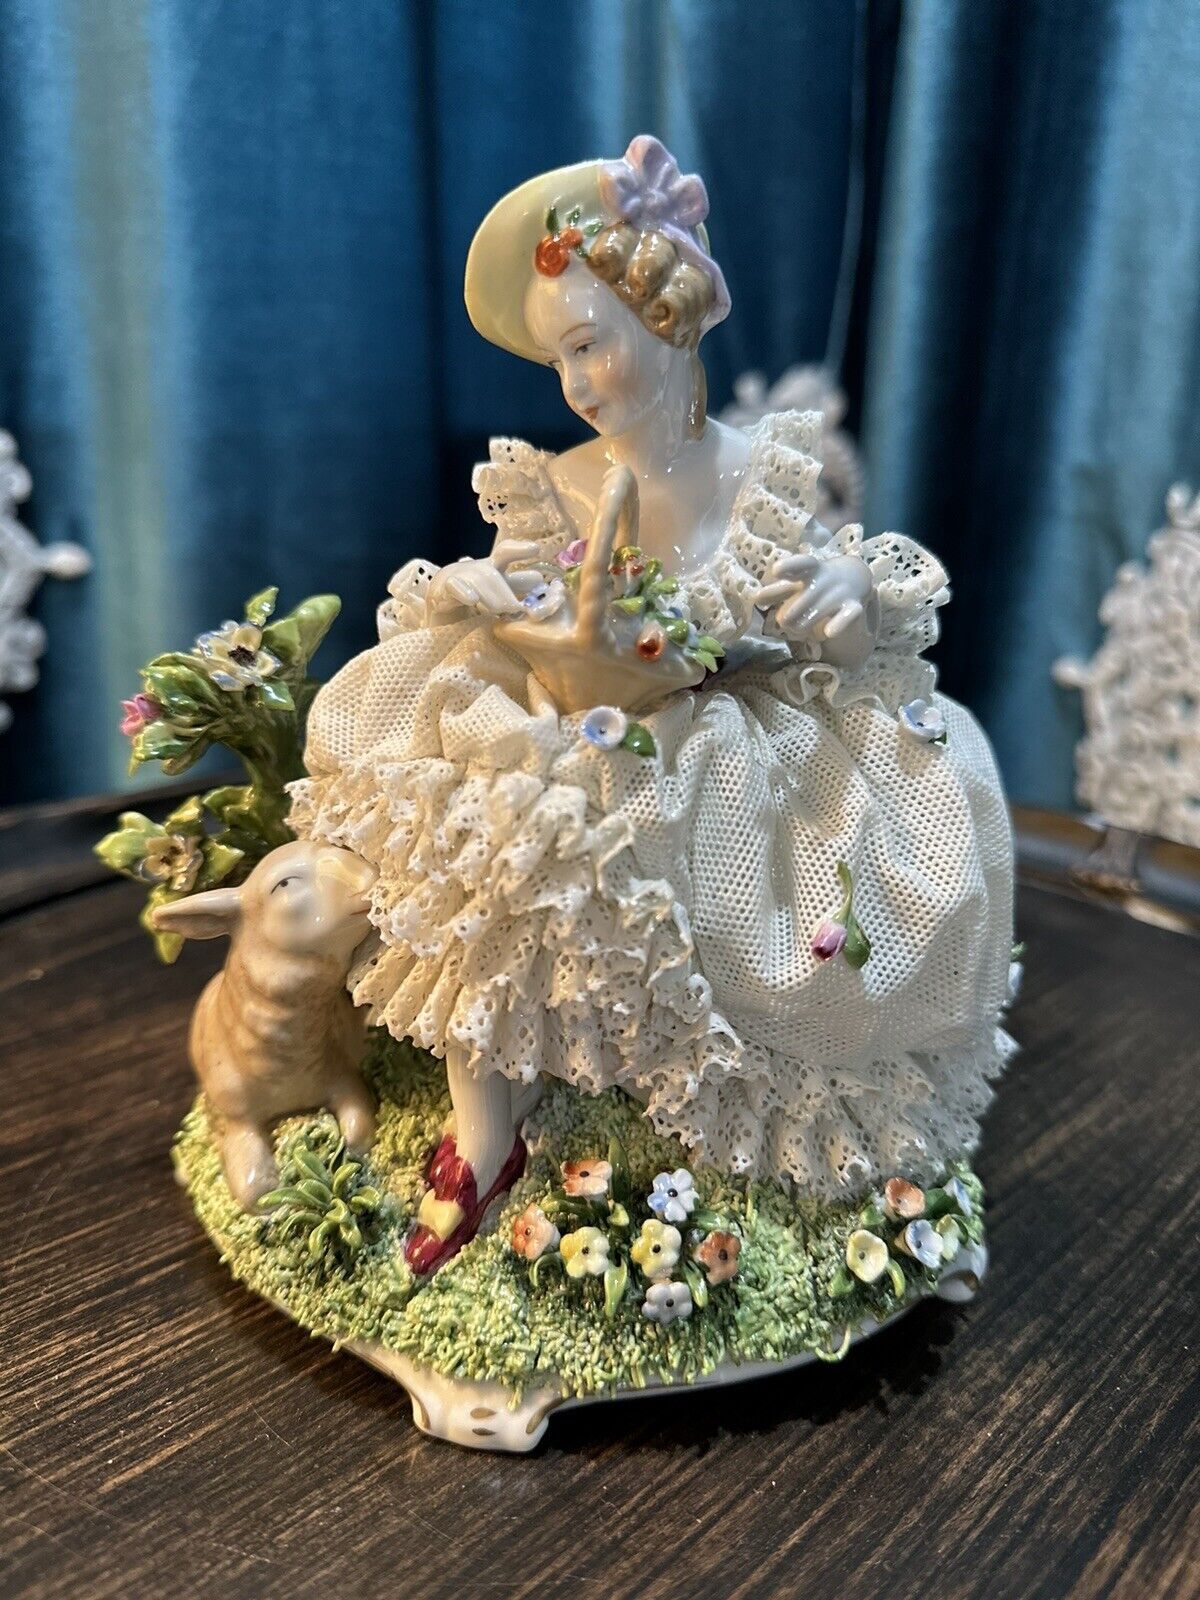 Stunning Dresden Porcelain Lace Figurine, 6” tall